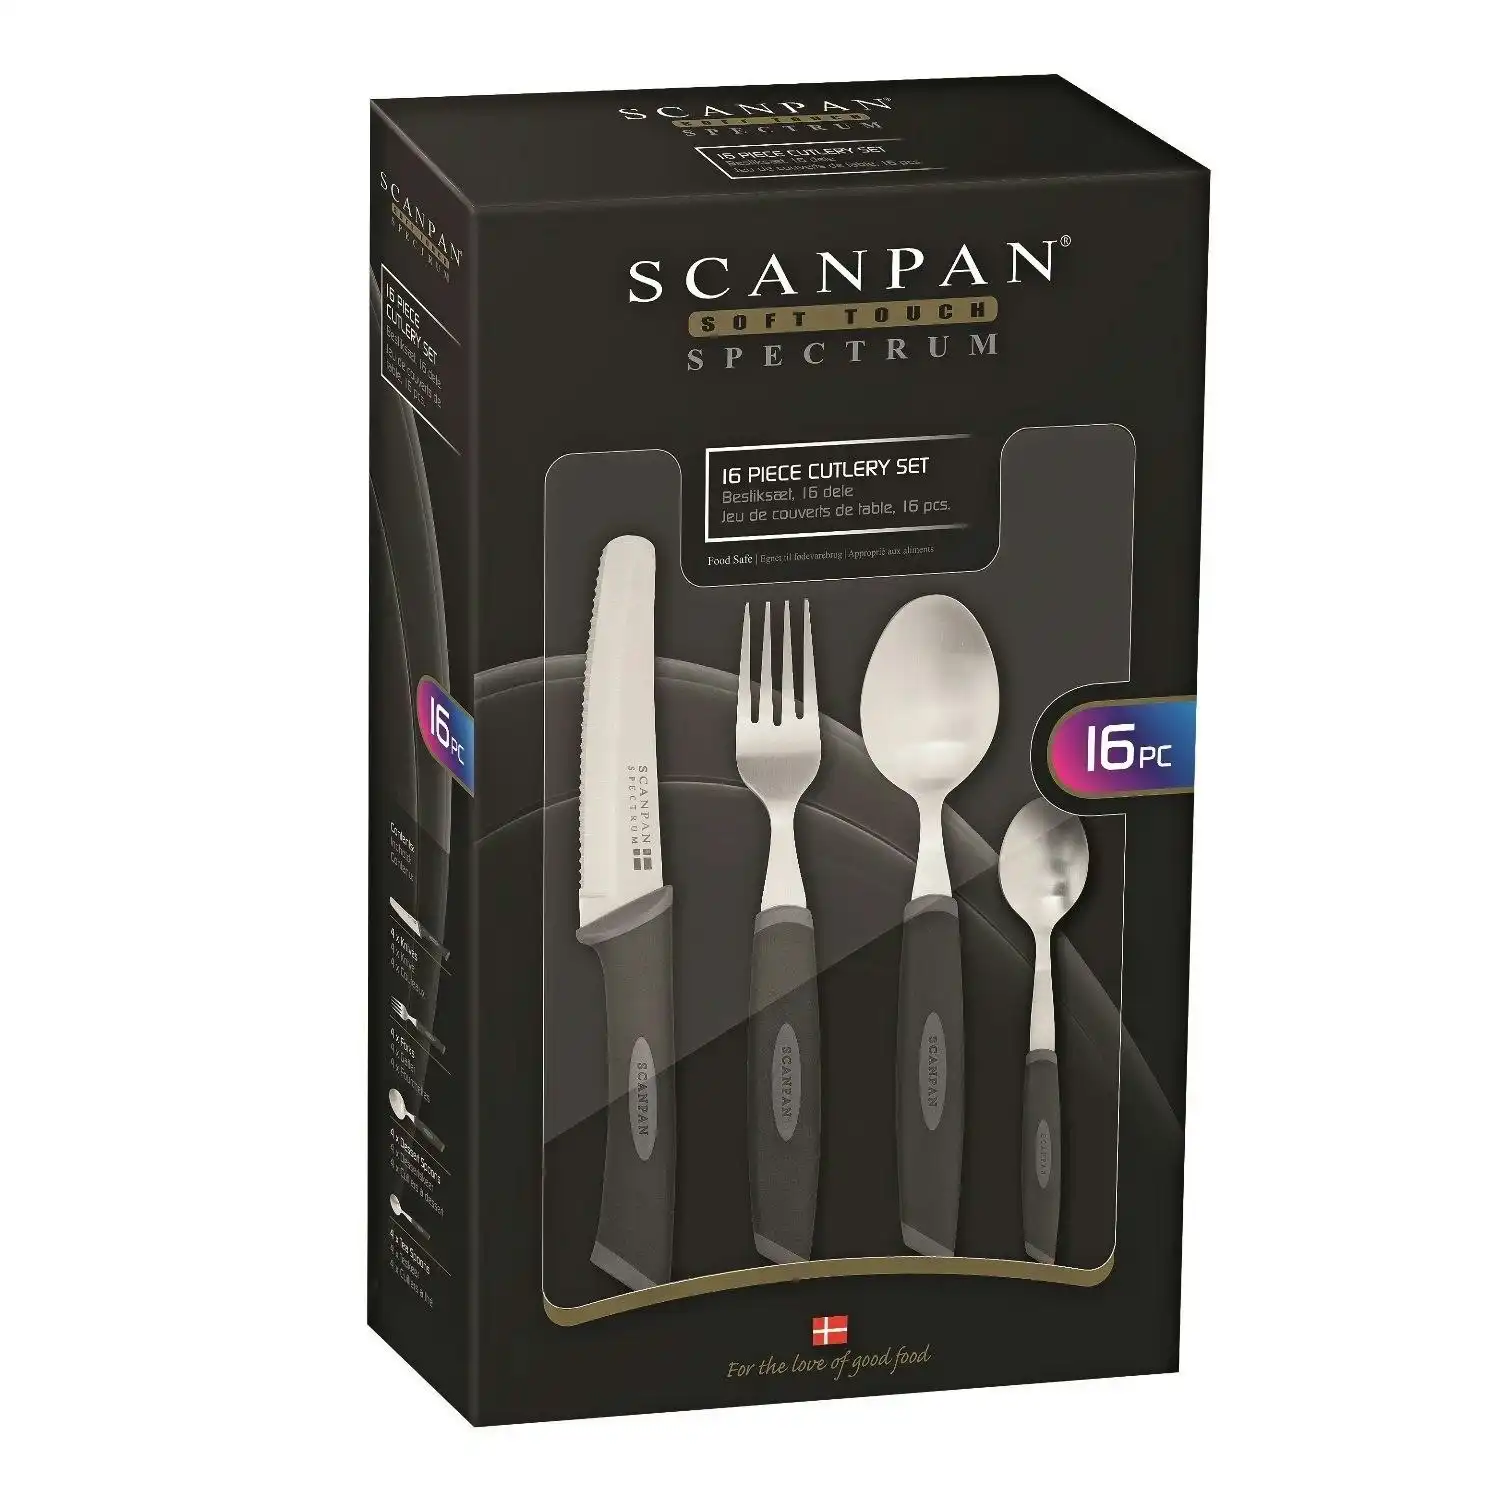 Scanpan Soft Touch Spectrum 16 Piece Cutlery Set   Black